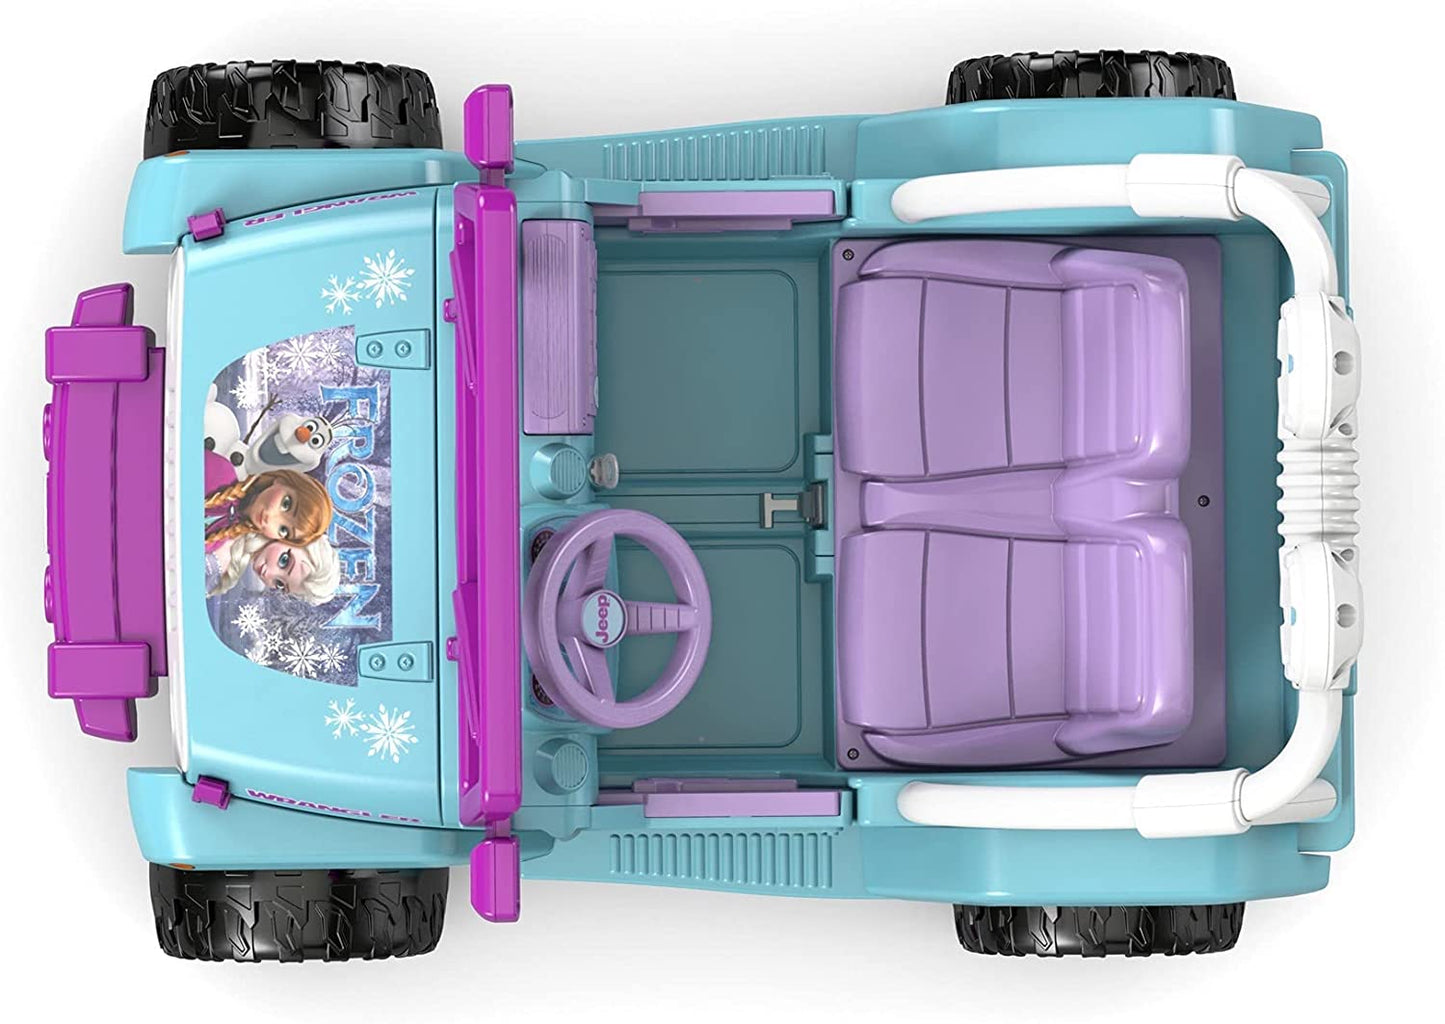 Power Wheels Disney Frozen Jeep Wrangler 12-V